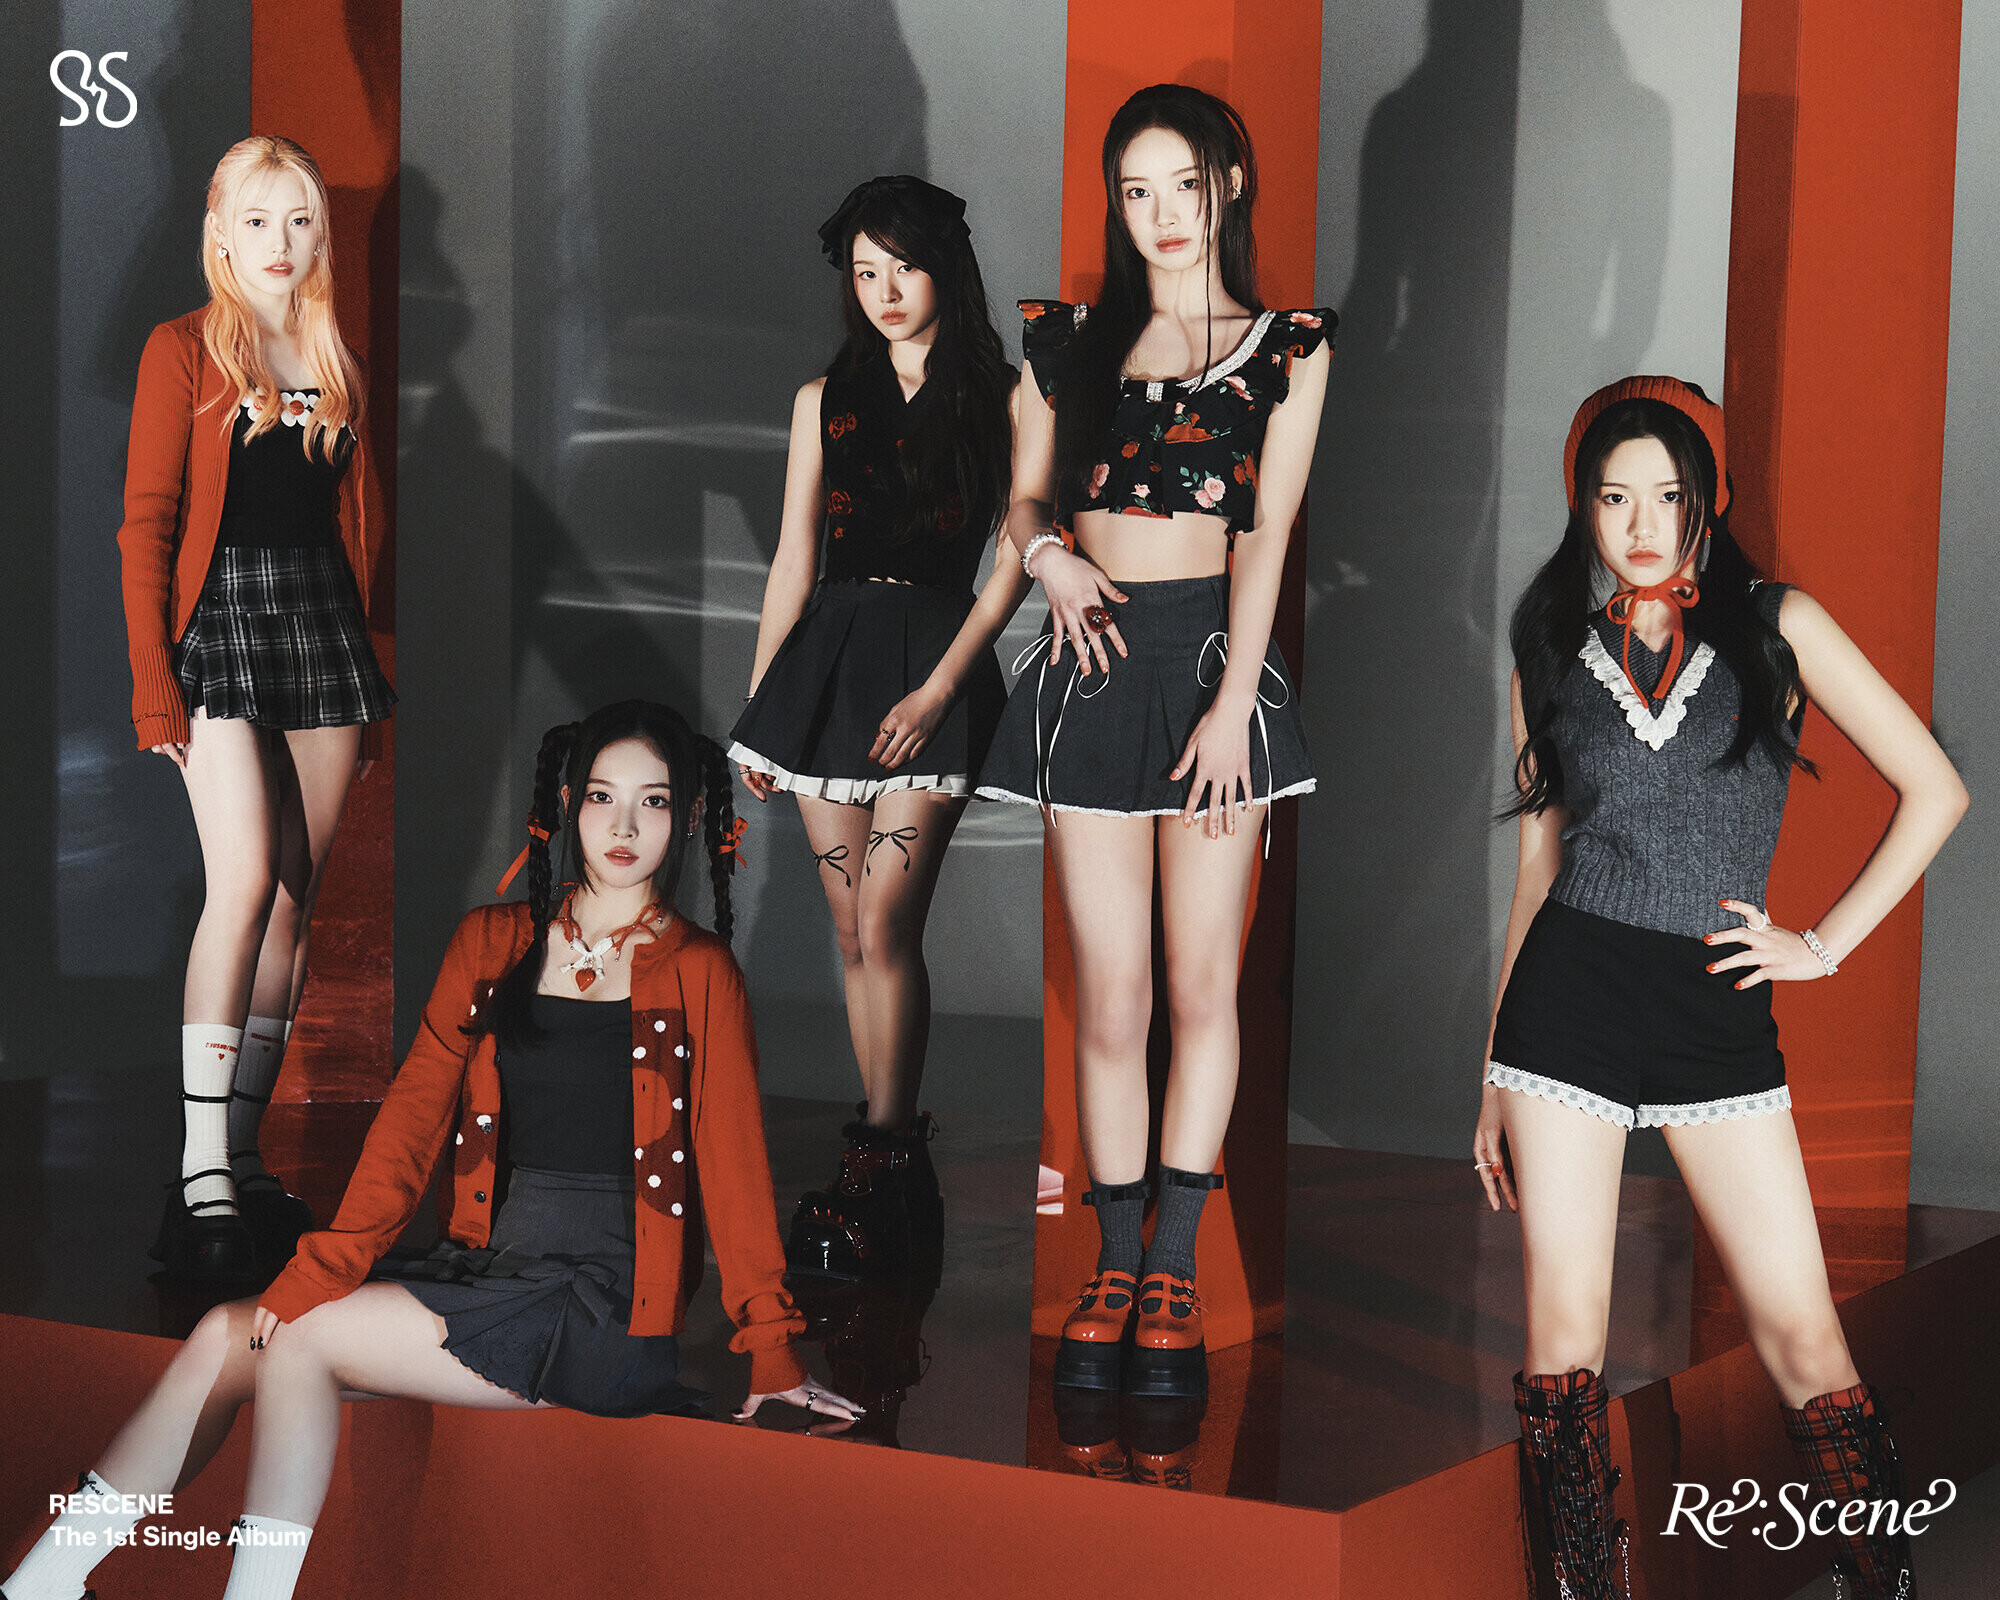 RESCENE - The 1st Single Album 'Re:Scene' Concept Photos | kpopping